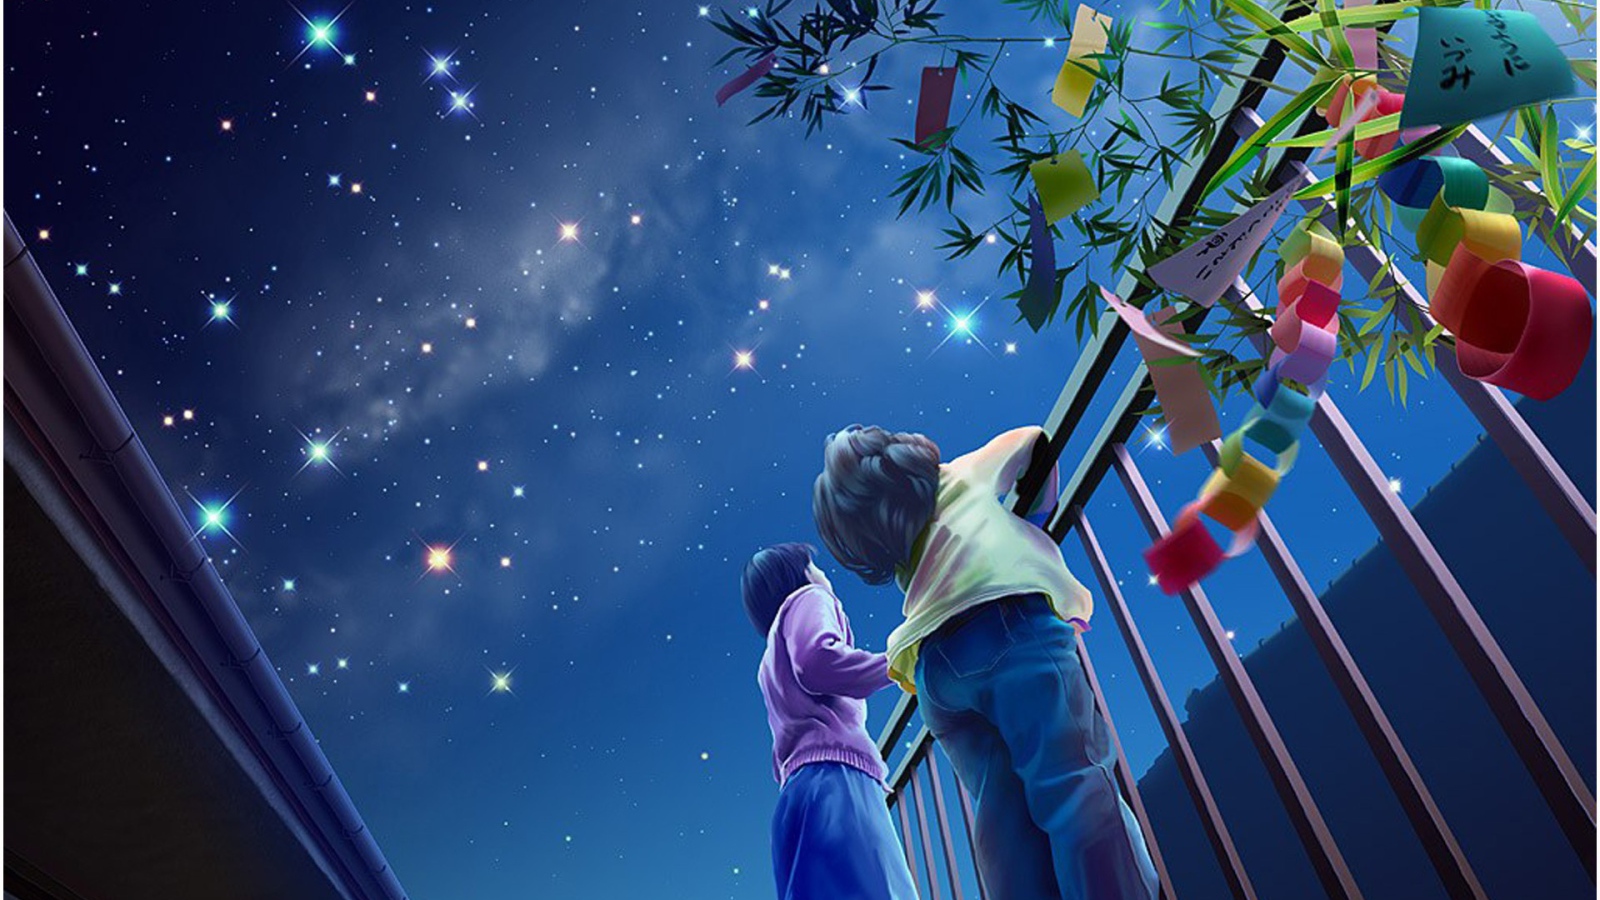 Children look to the stars